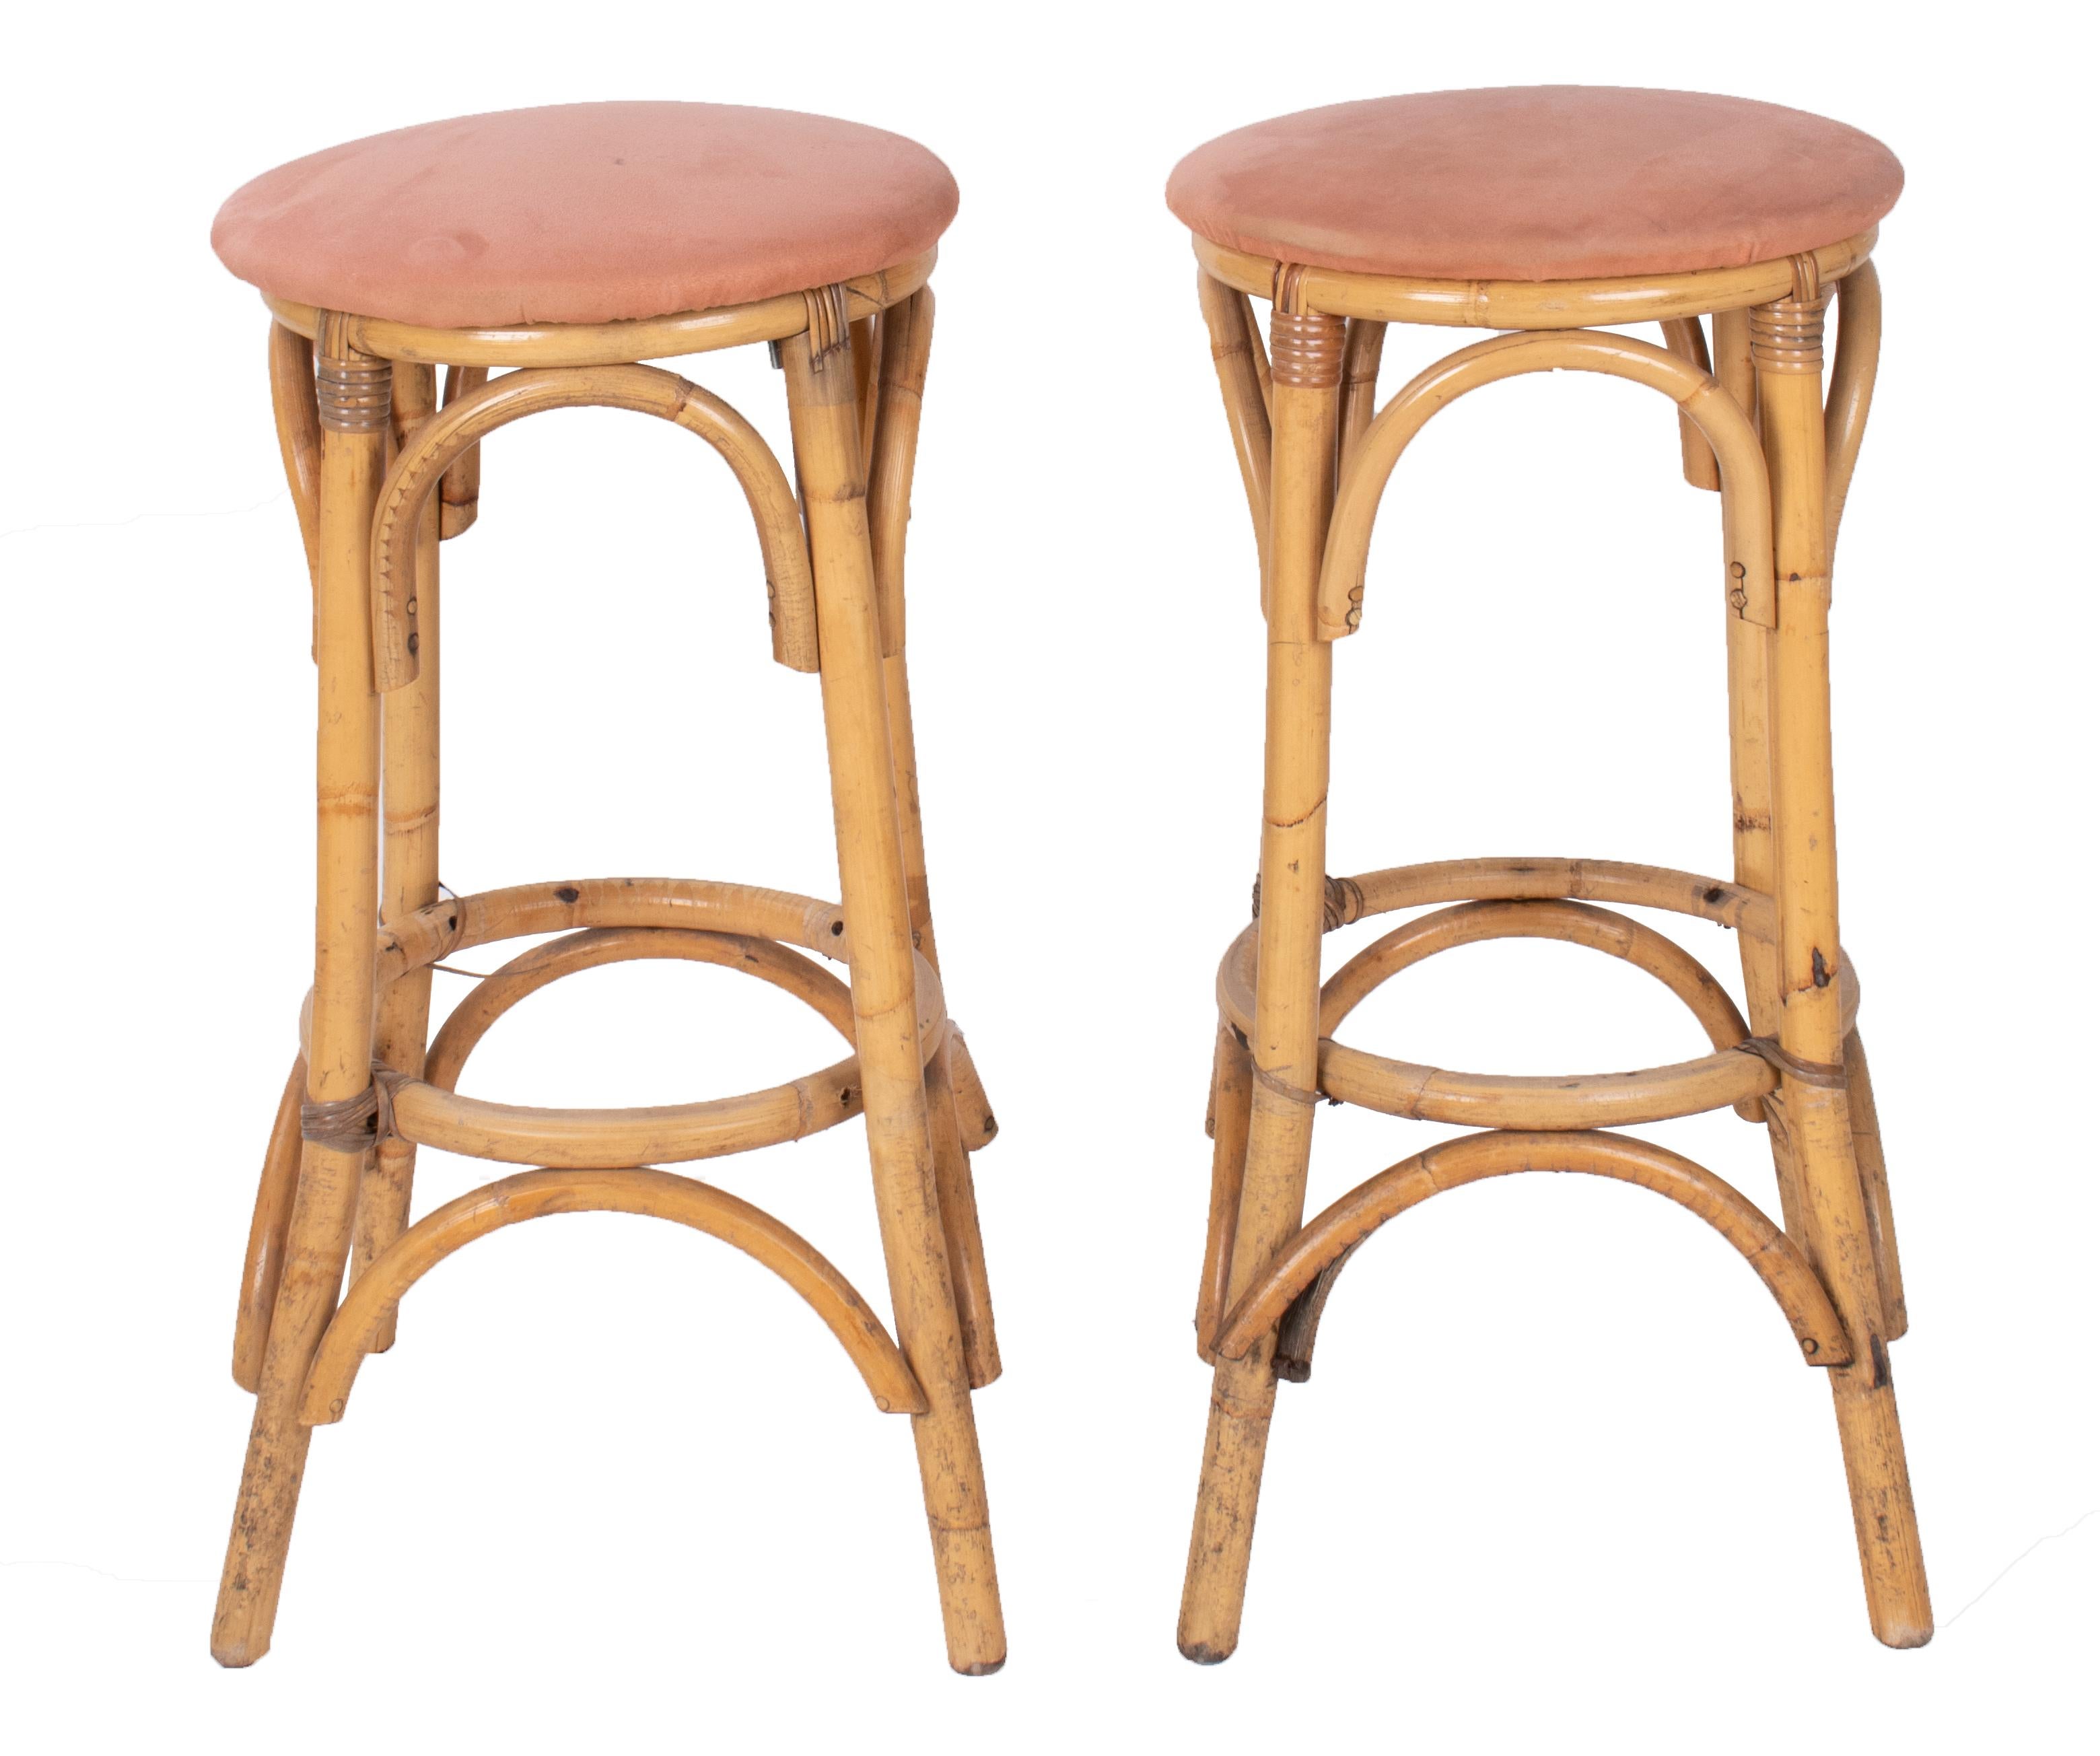 1970s pair of Spanish bamboo and wicker stools.